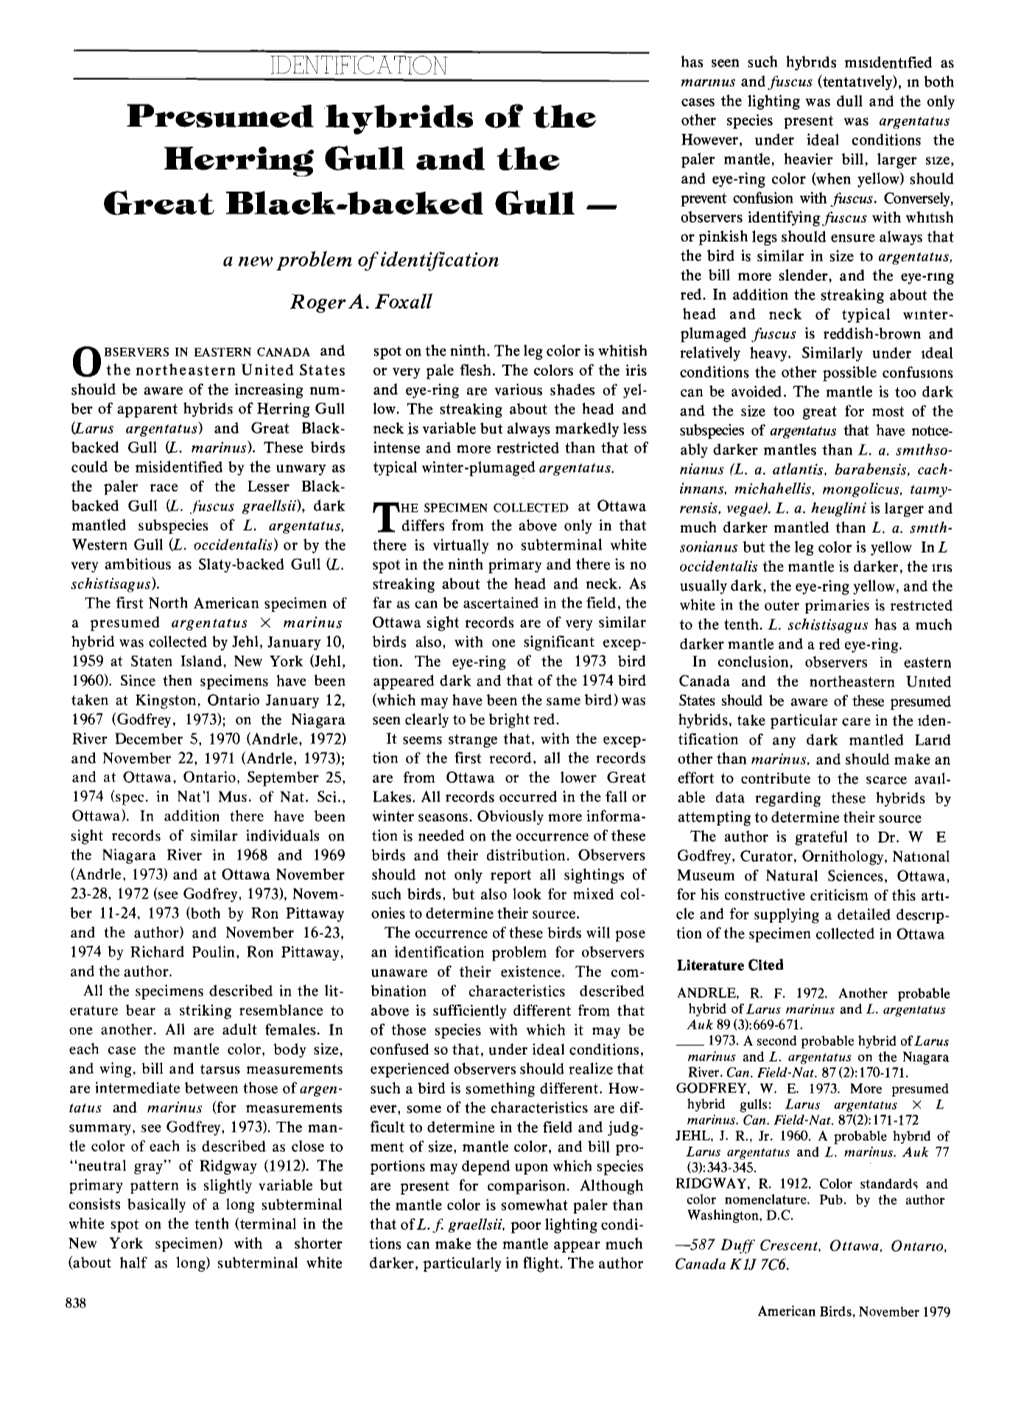 Presumed Hybrids of the Herring Gull and the Great Black-Backed Gull